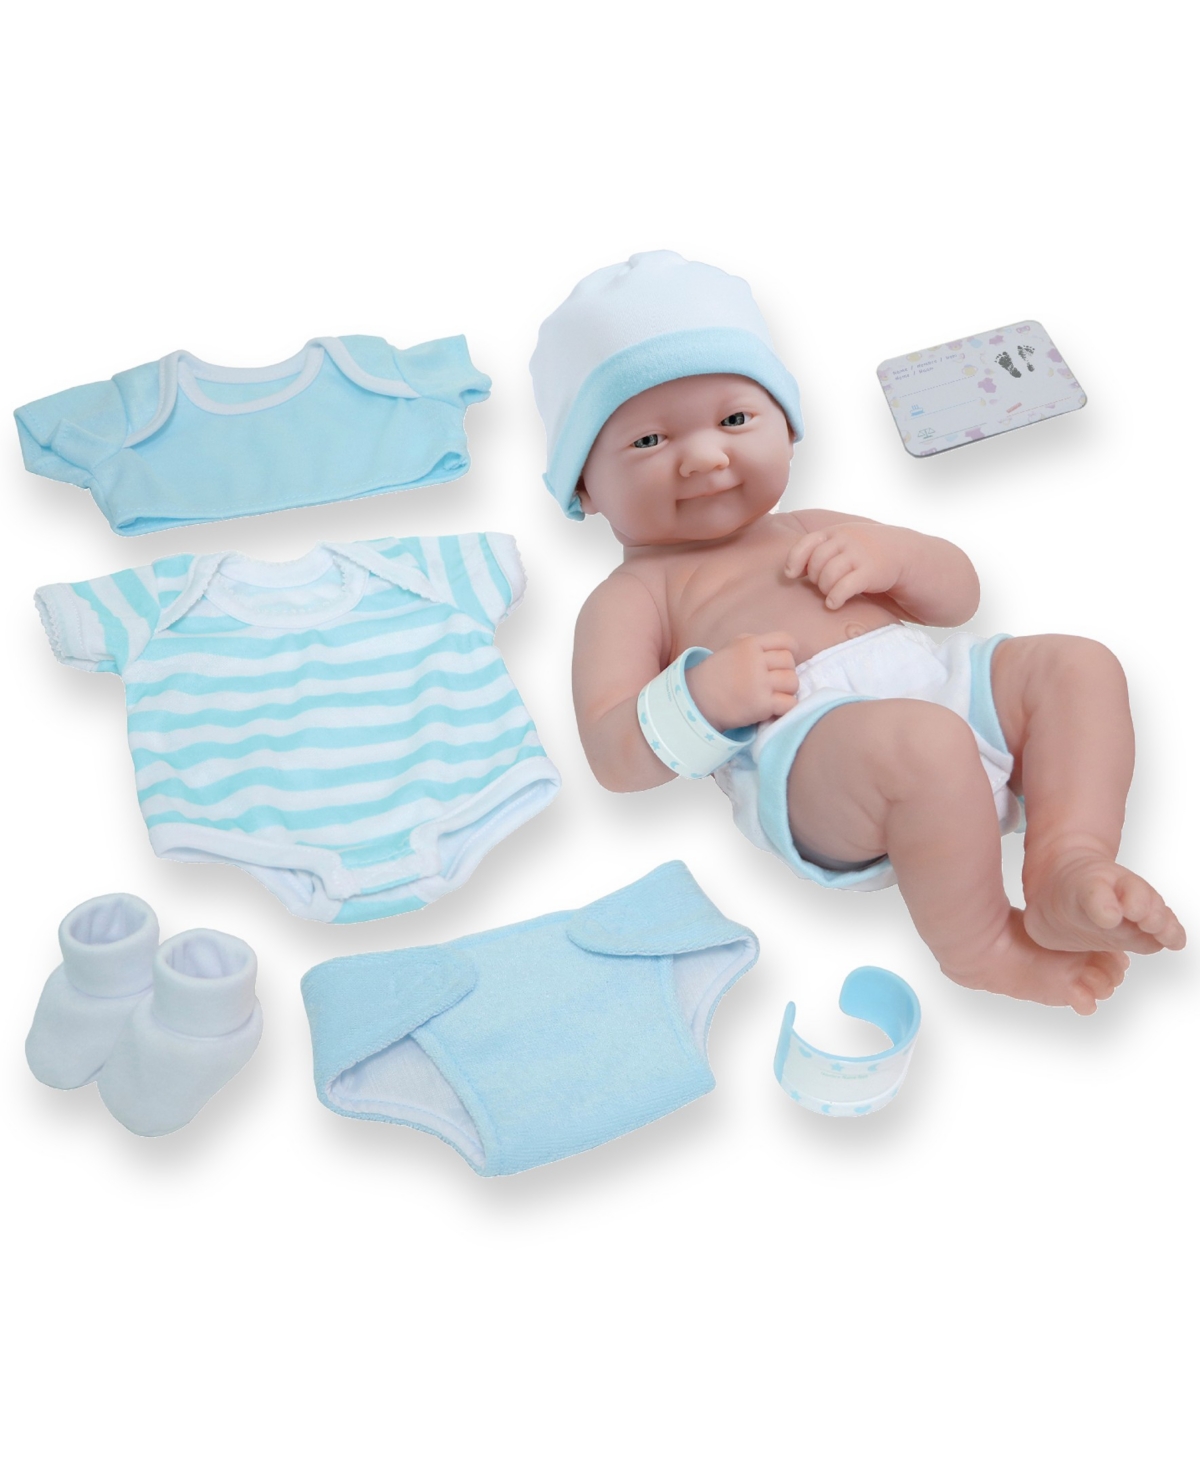 Jc Toys La Newborn Nursery 14" Smiling Baby Doll 8 Pcs Blue Gift Set In Smiling Face - Blue